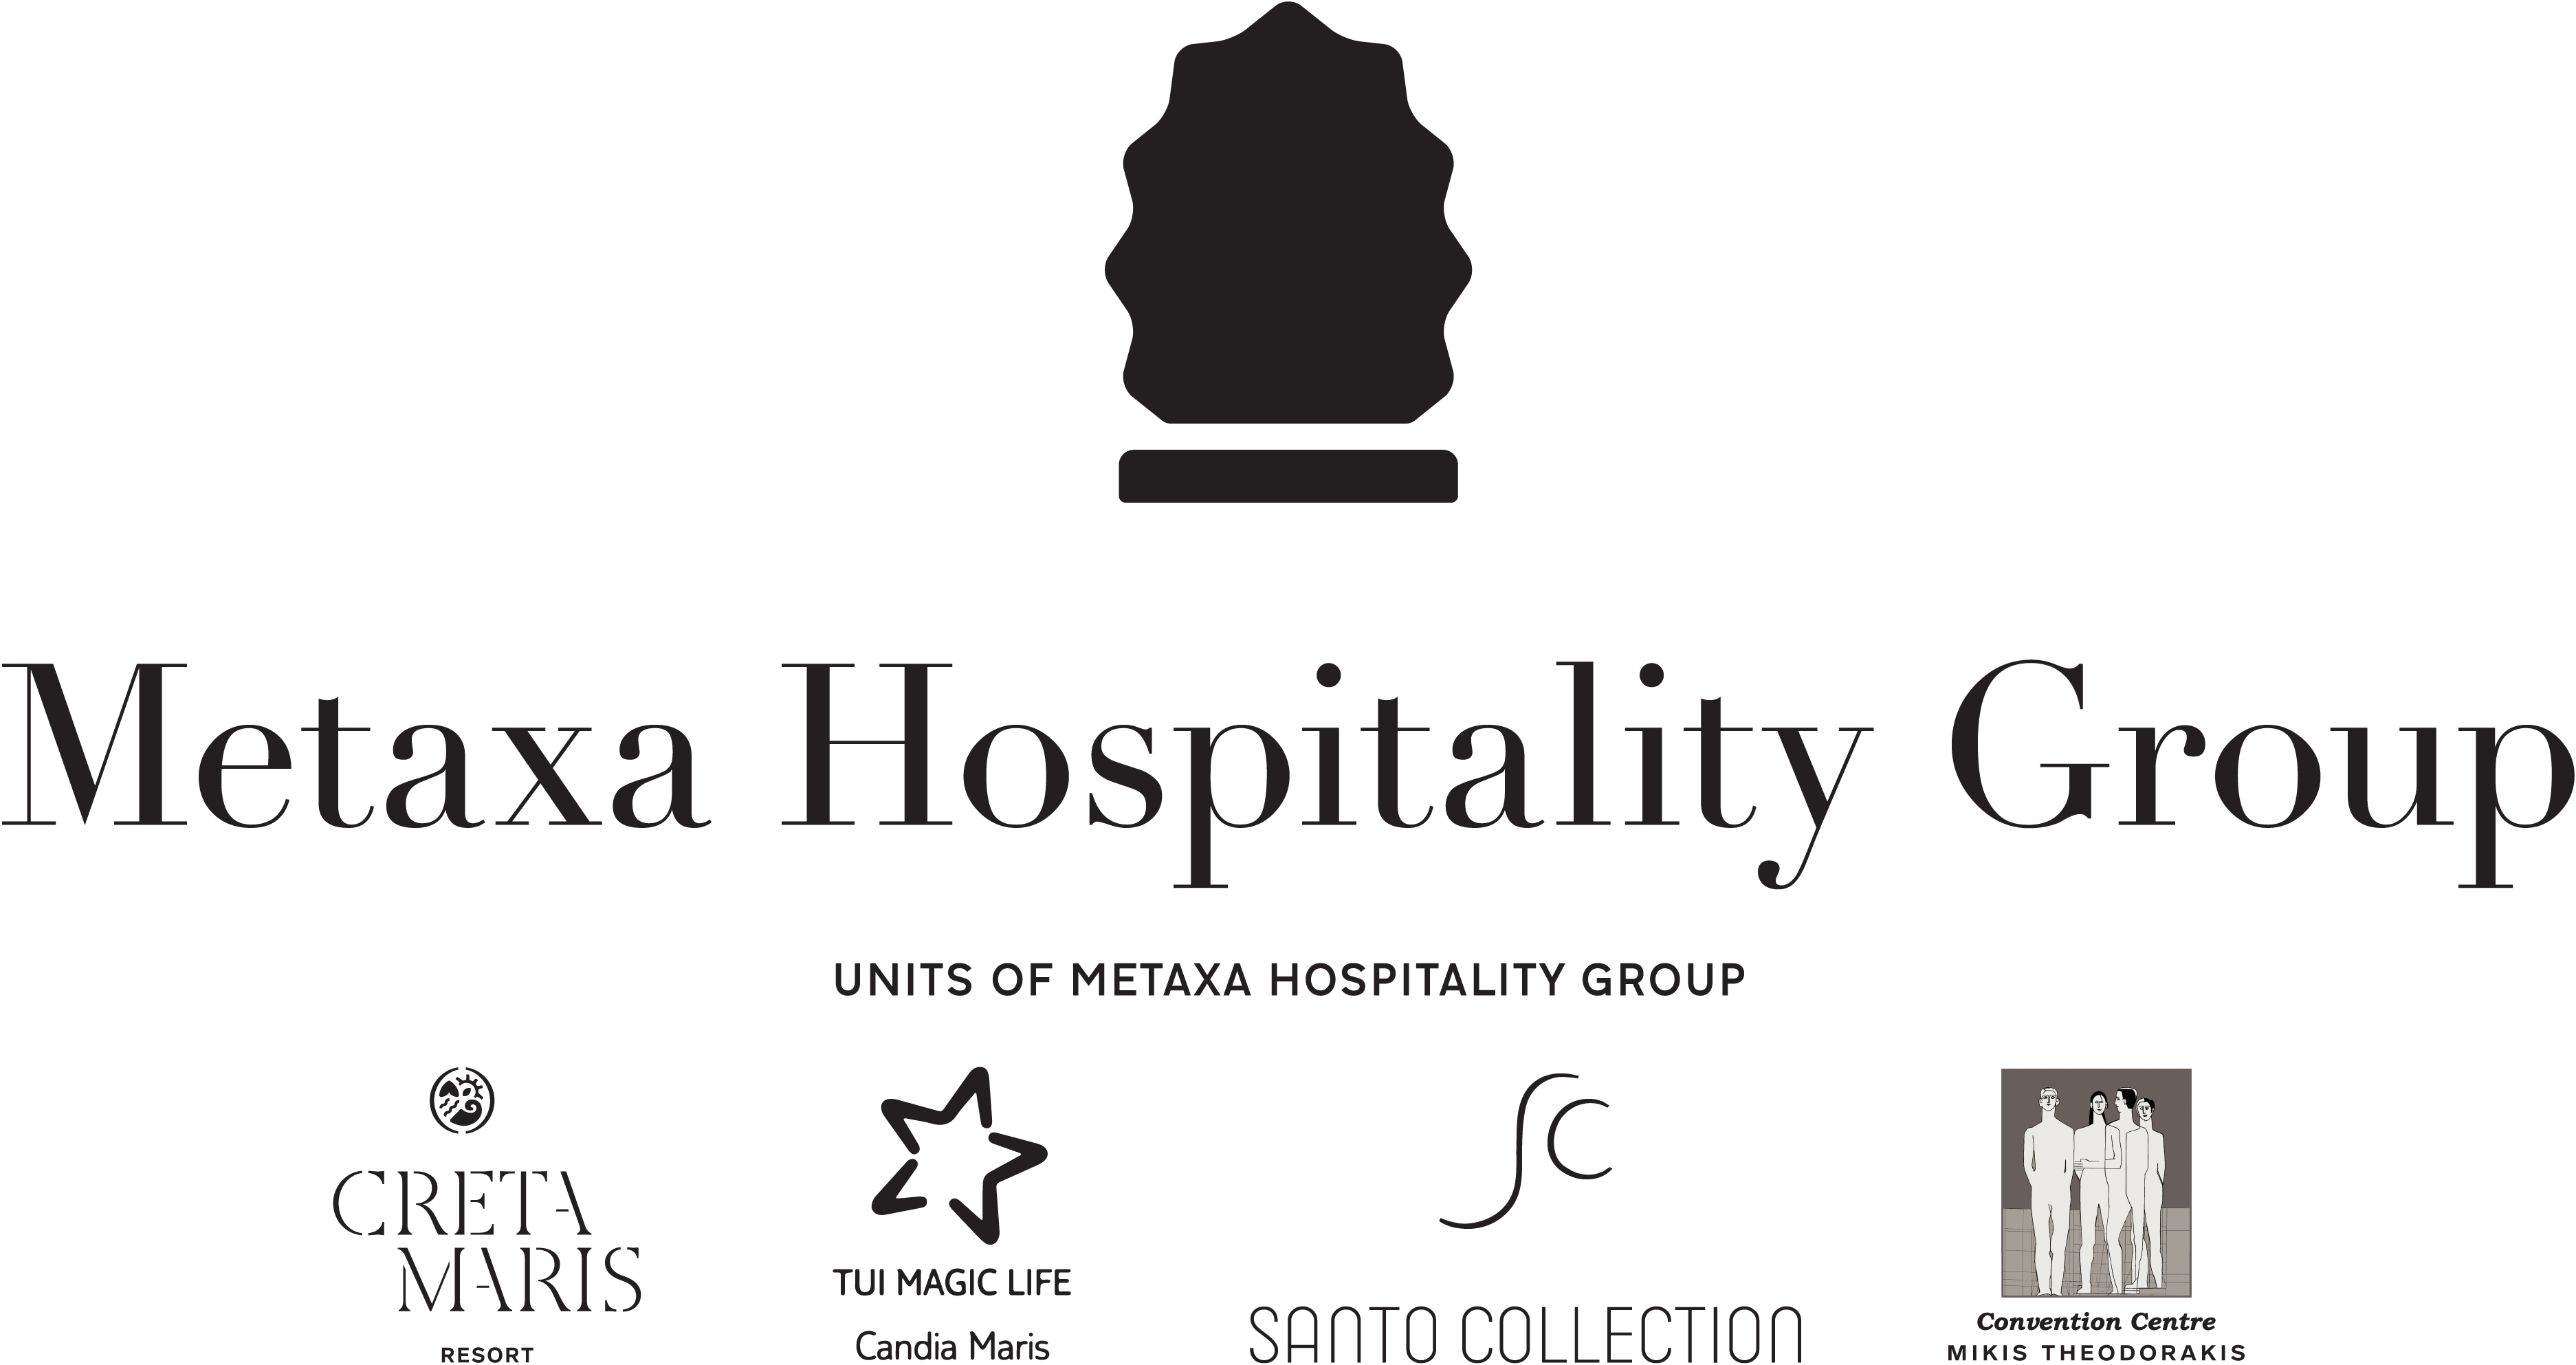 Metaxa Hospitality Group